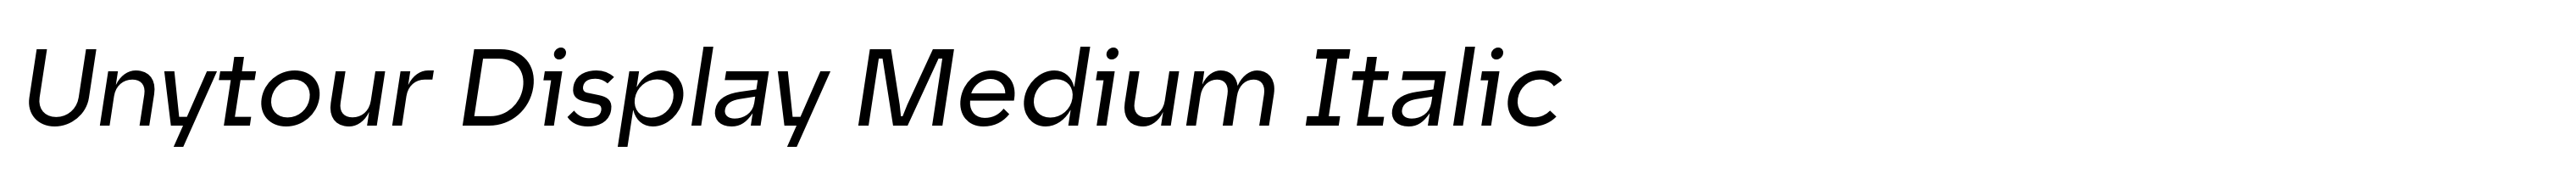 Unytour Display Medium Italic